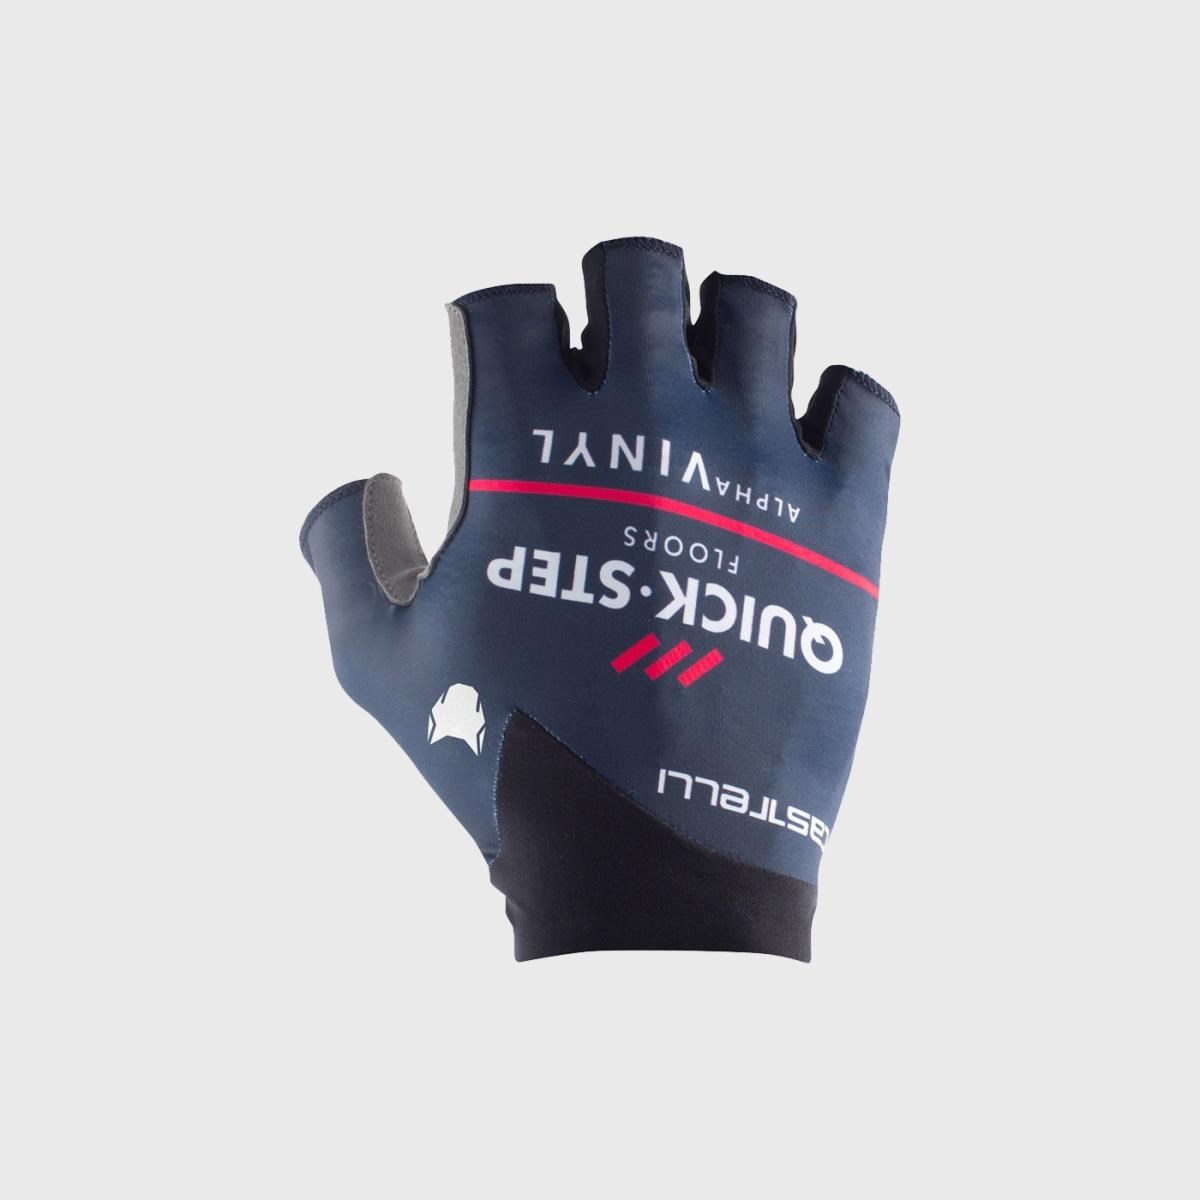 Castelli Quick-Step Alpha Vinyl Pro Team Competizione 2 Mitts Short Finger Gloves product image